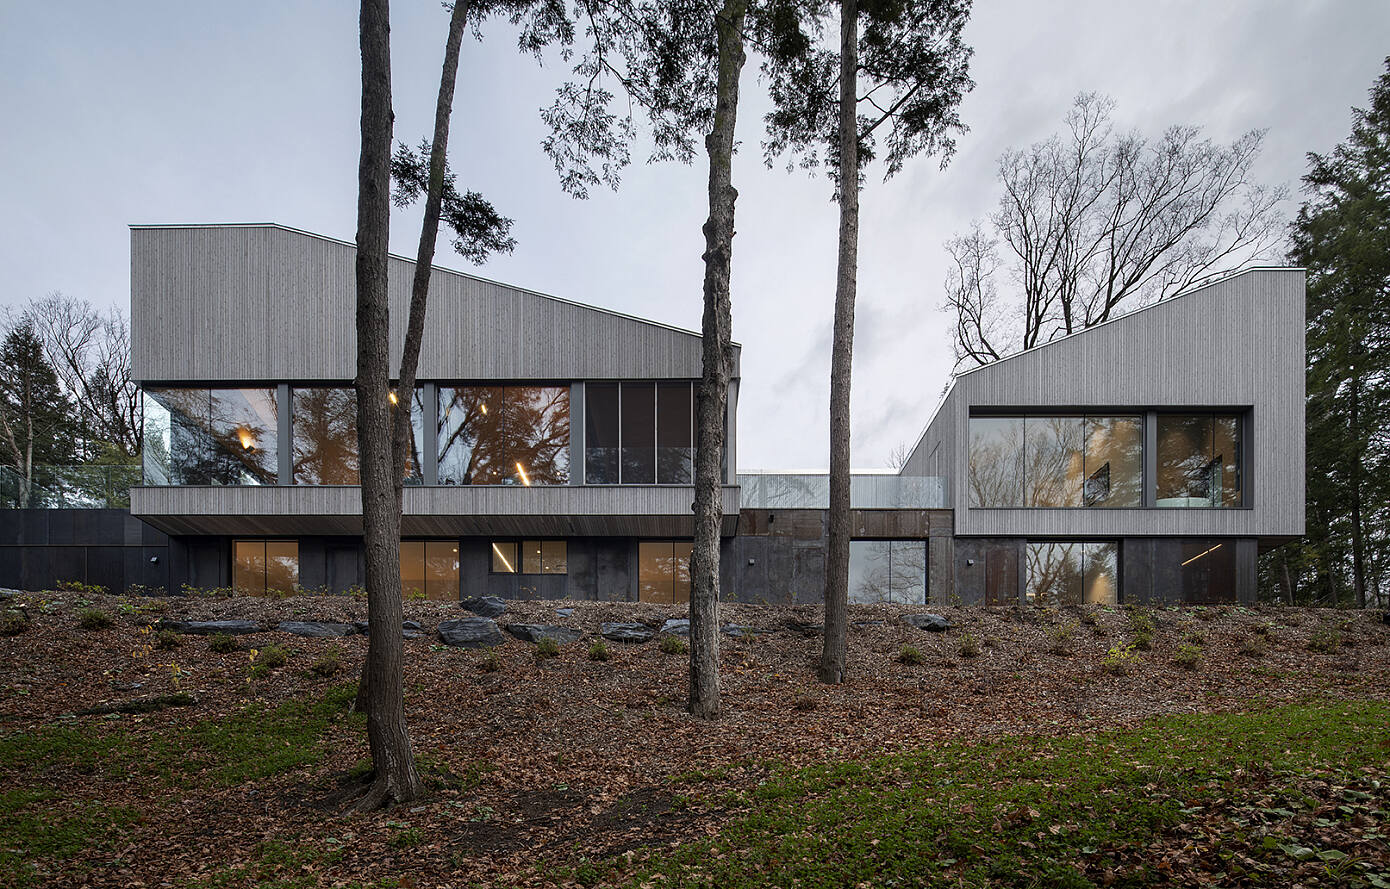 Memphremagog Lake House by Naturehumaine [architecture+design]